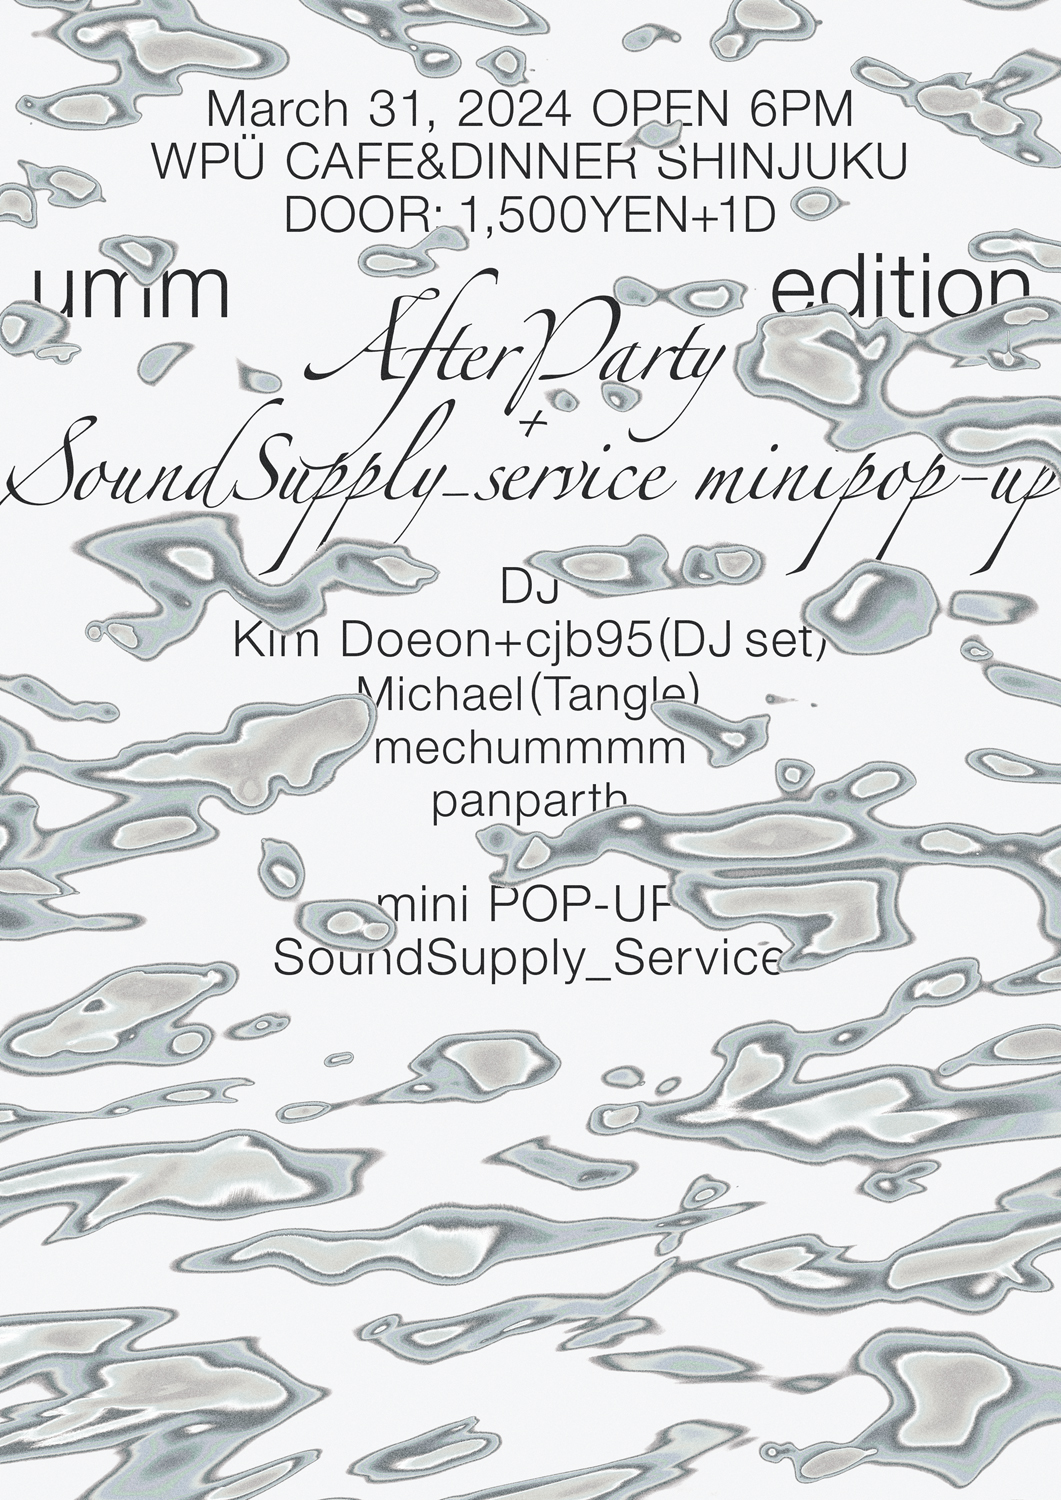 umm edition after party + SoundSupply_service mini POP-UP